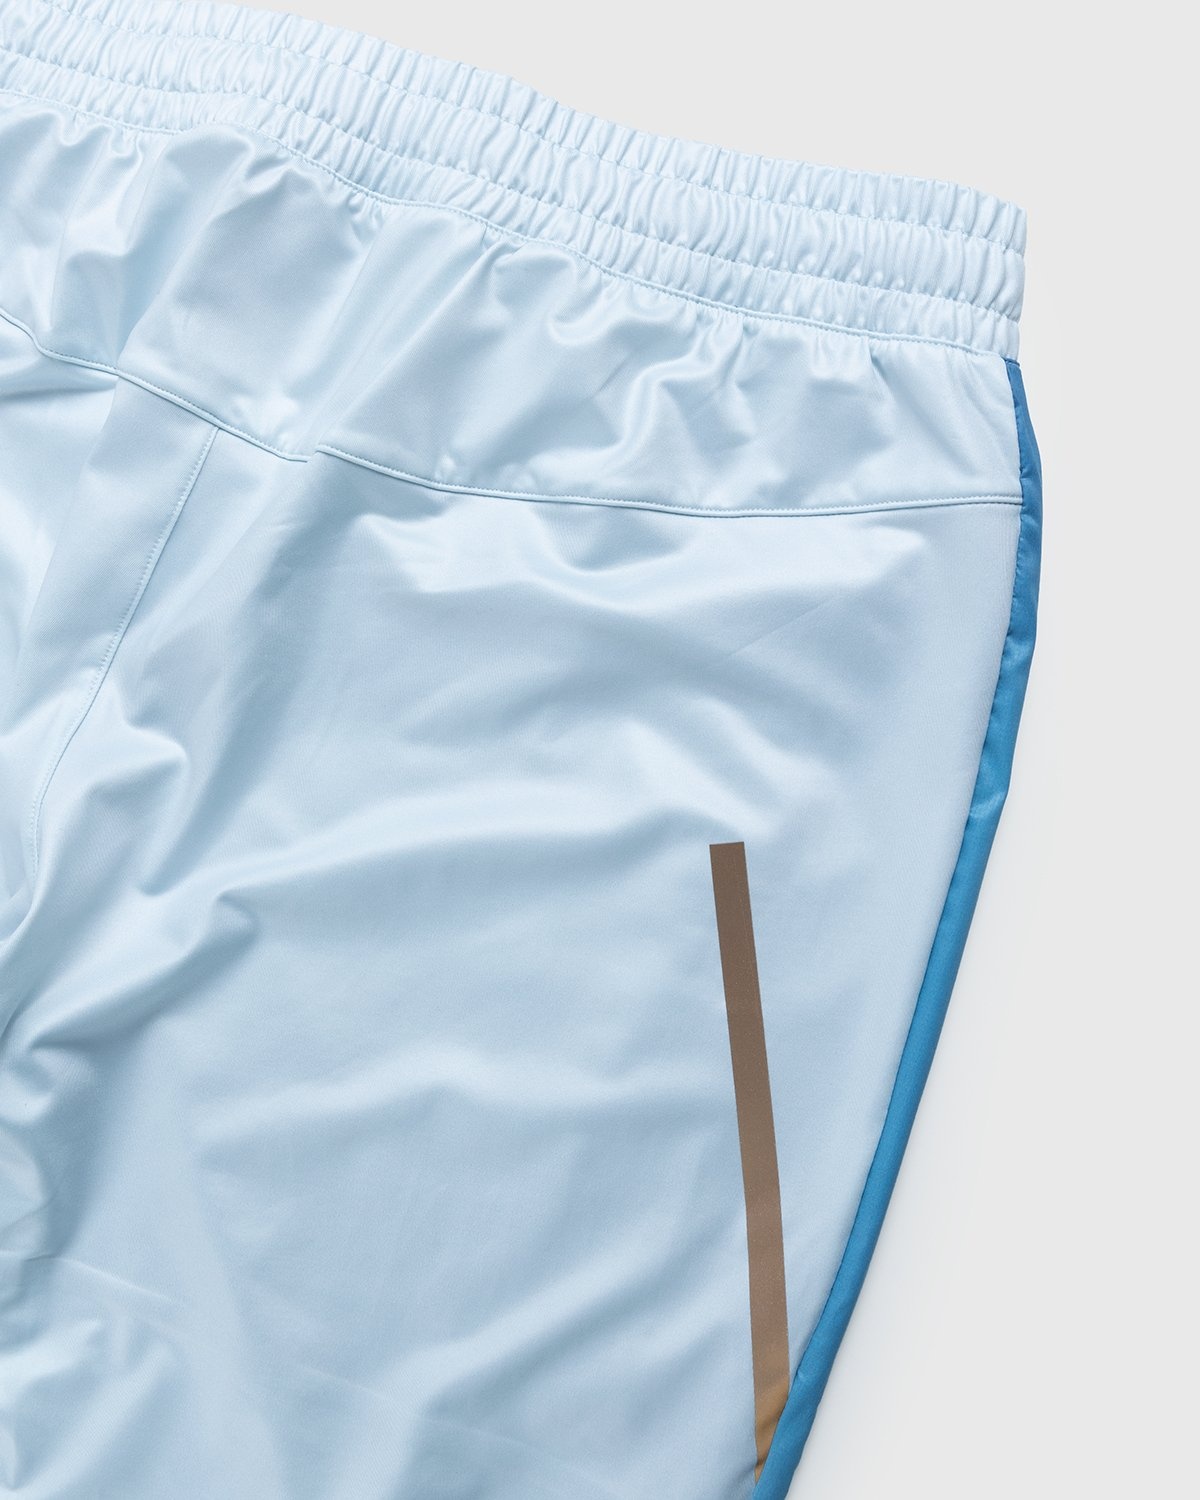 Loewe x On – Men's Technical Running Pants Gradient Grey - Pants - Blue - Image 4